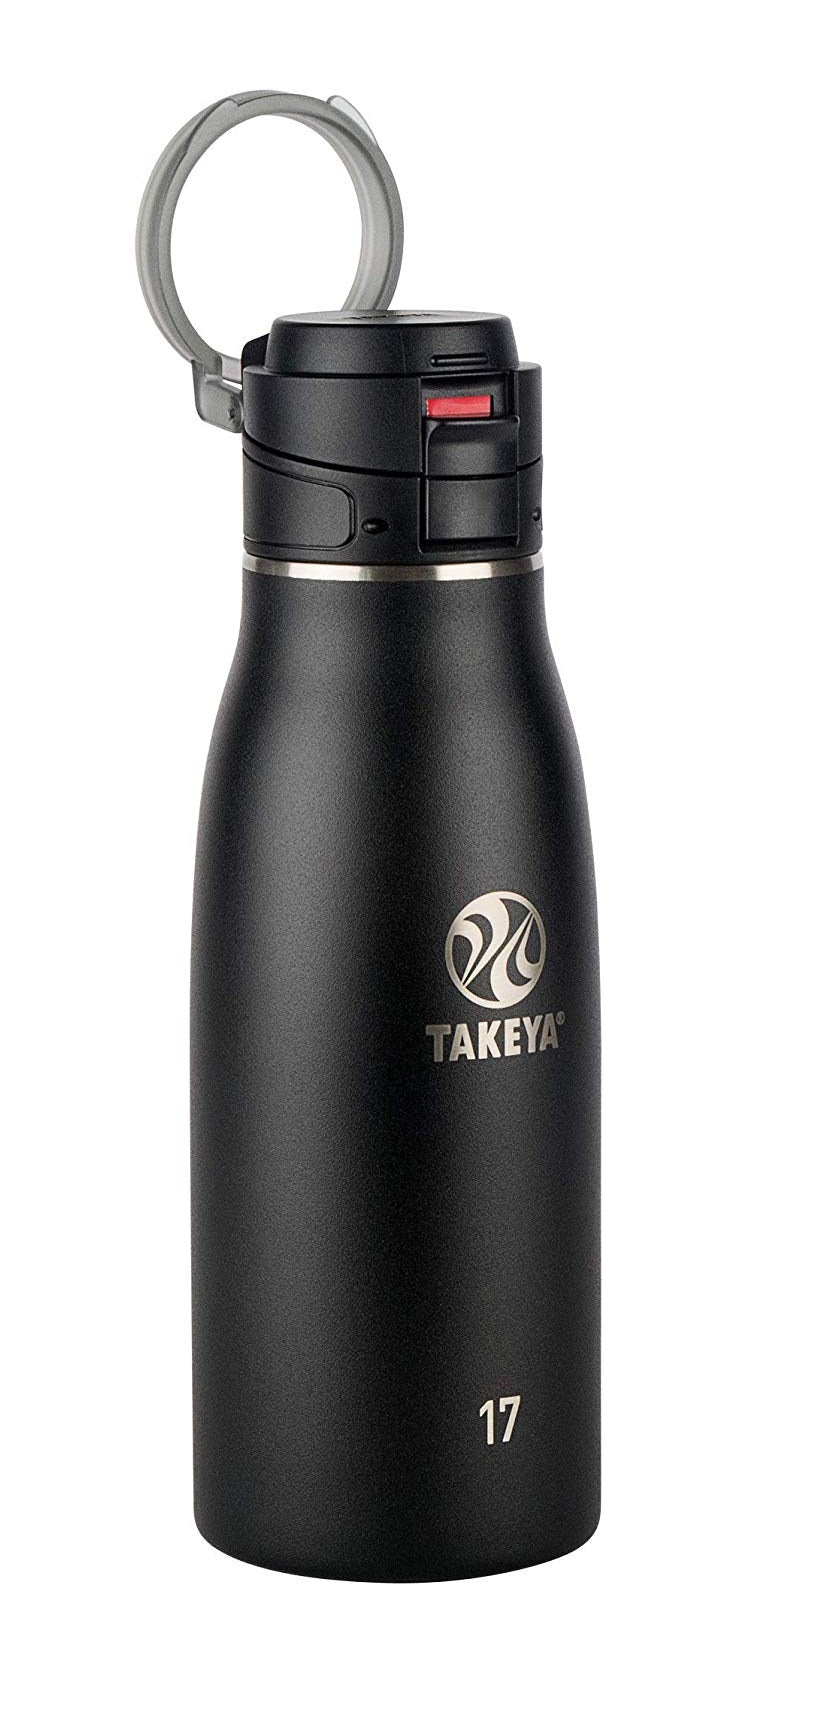 Takeya 51273 Traveler Double Wall Water Bottle, 17 oz.